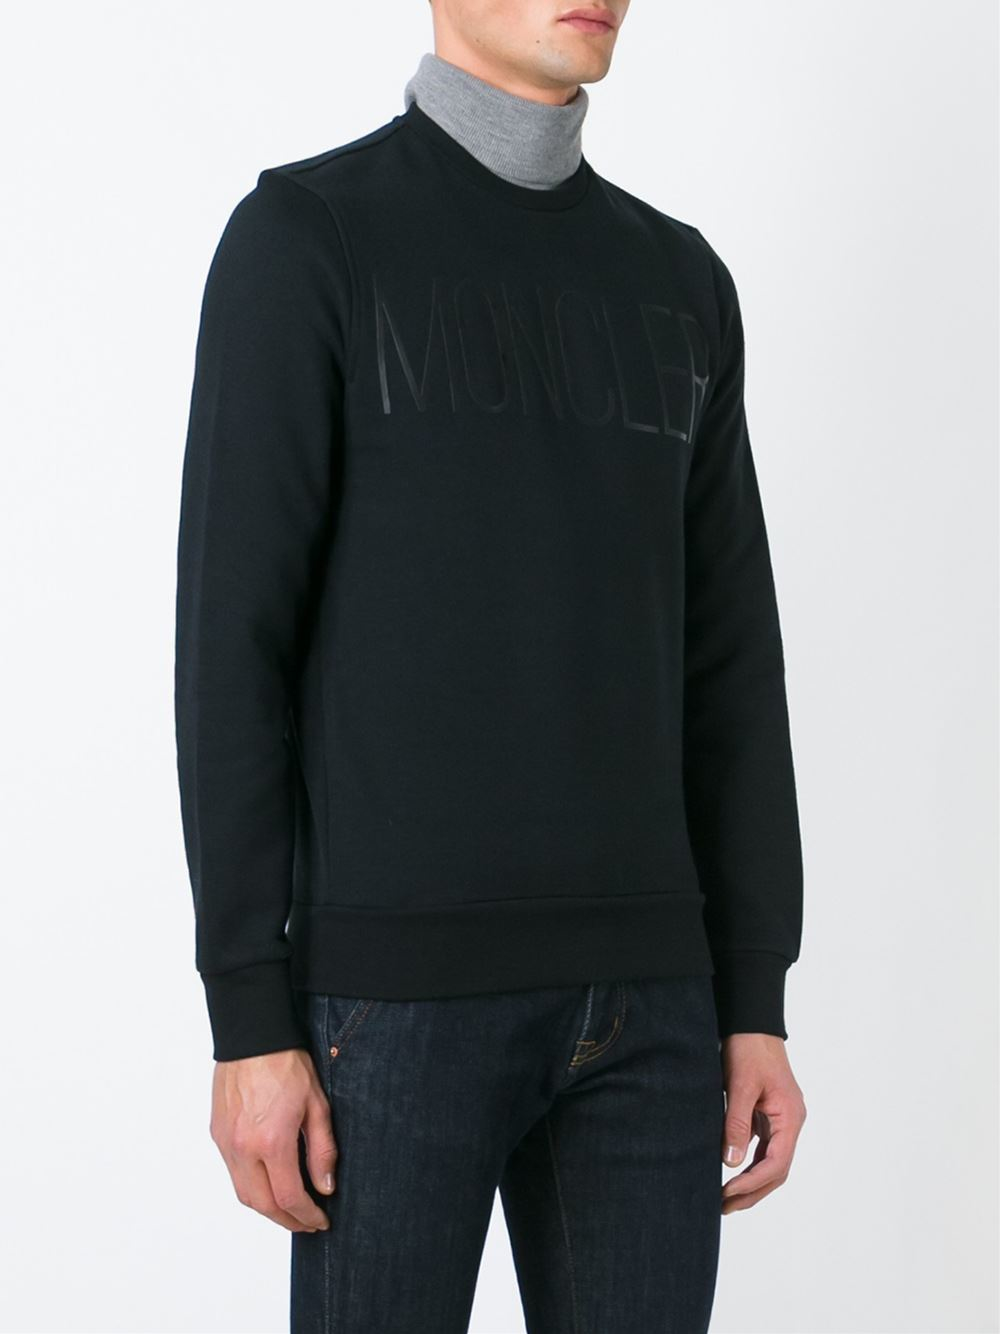 Lyst - Moncler Logo Print Sweatshirt in Black for Men